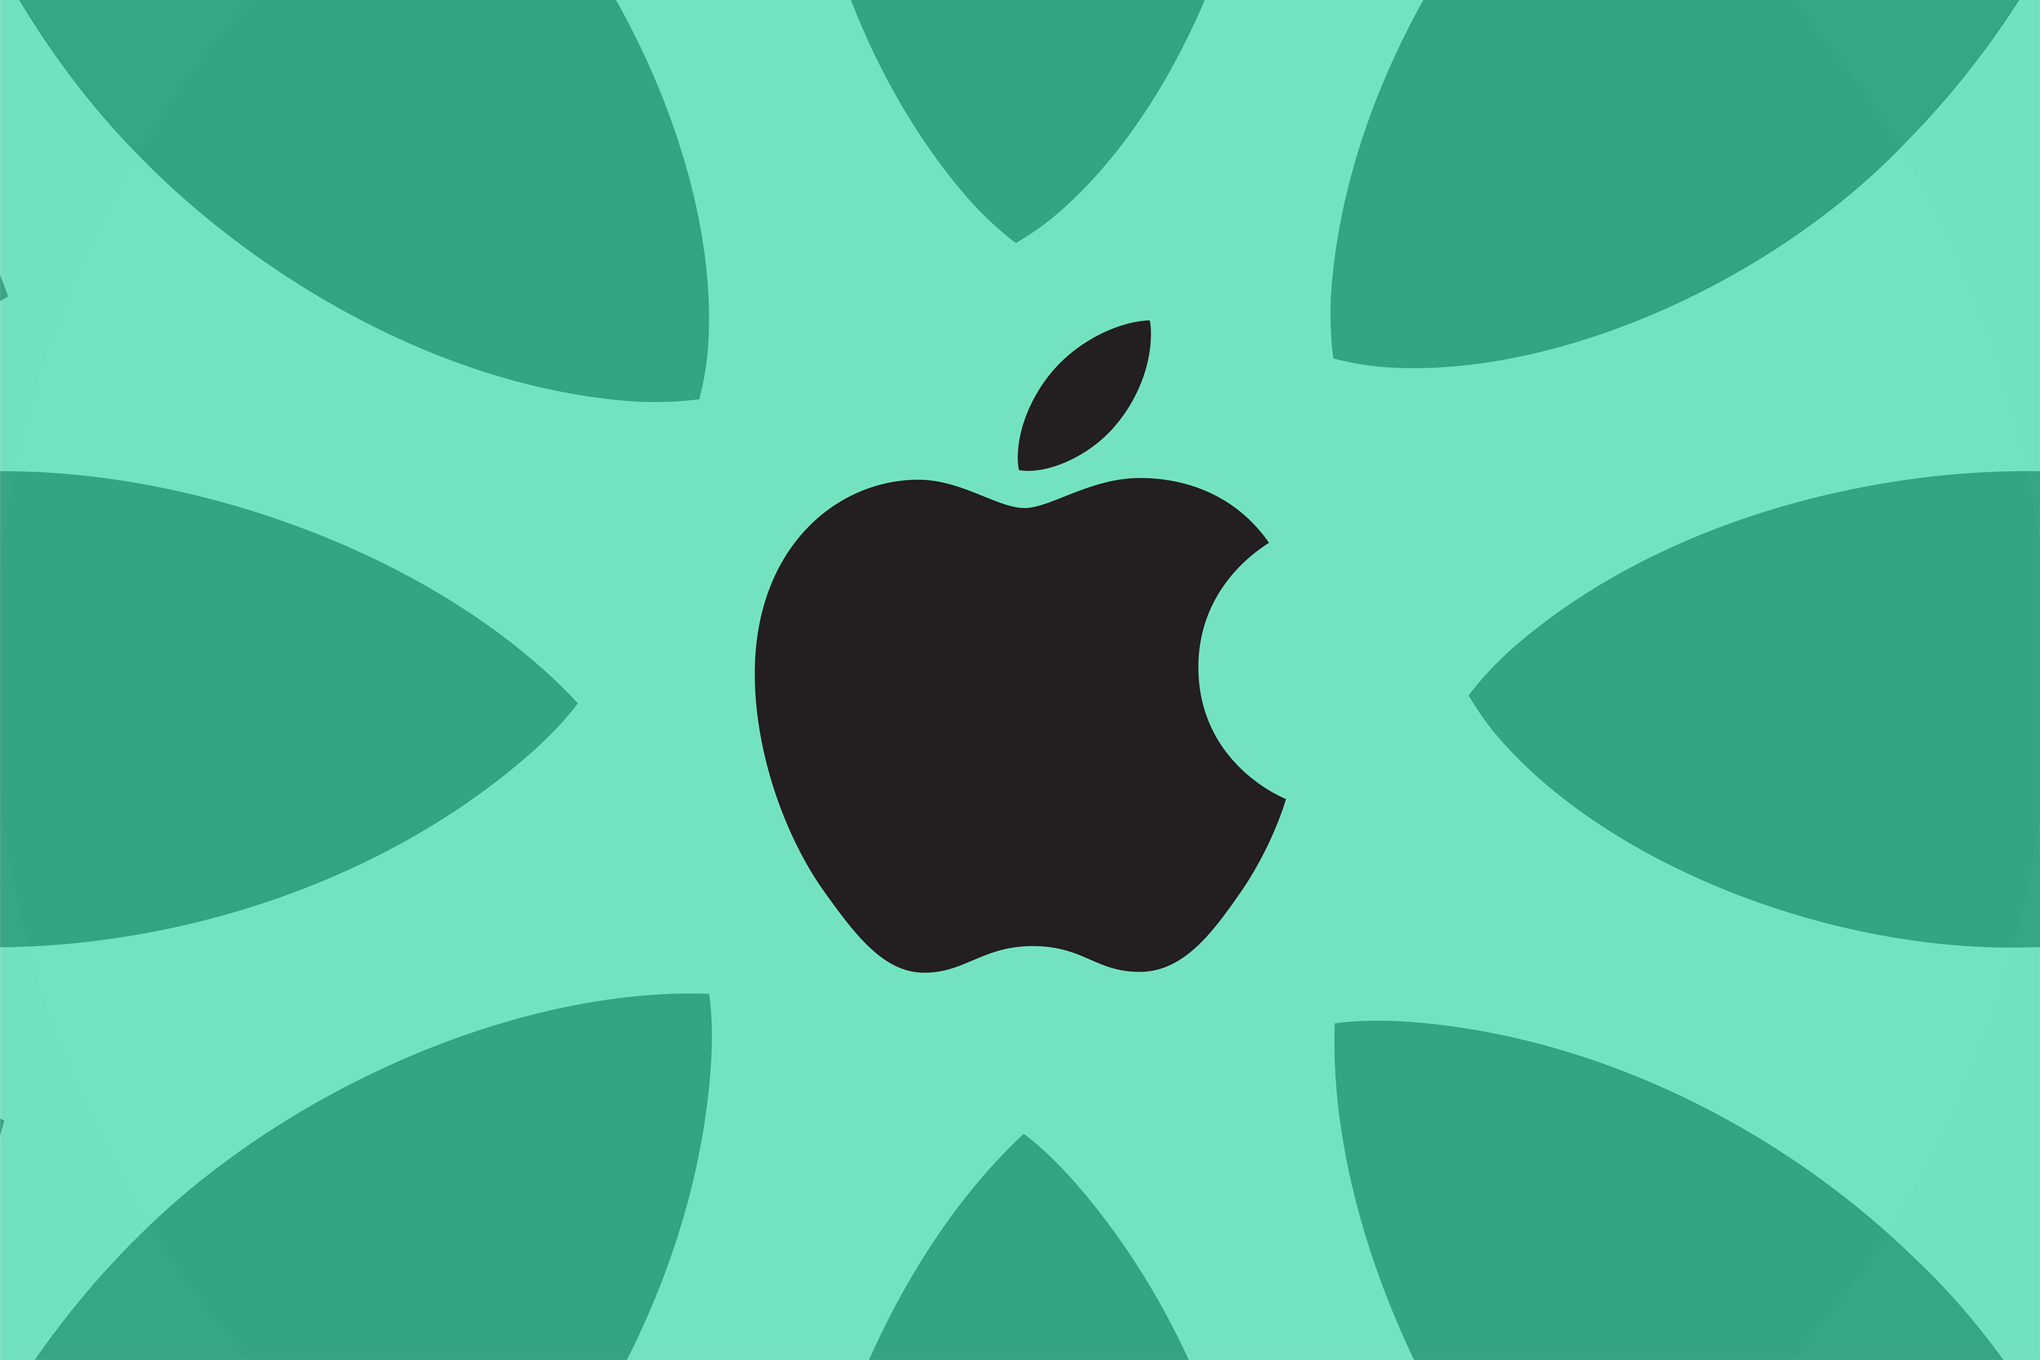 Green backdrop, black apple logo, apple leaves surrounding